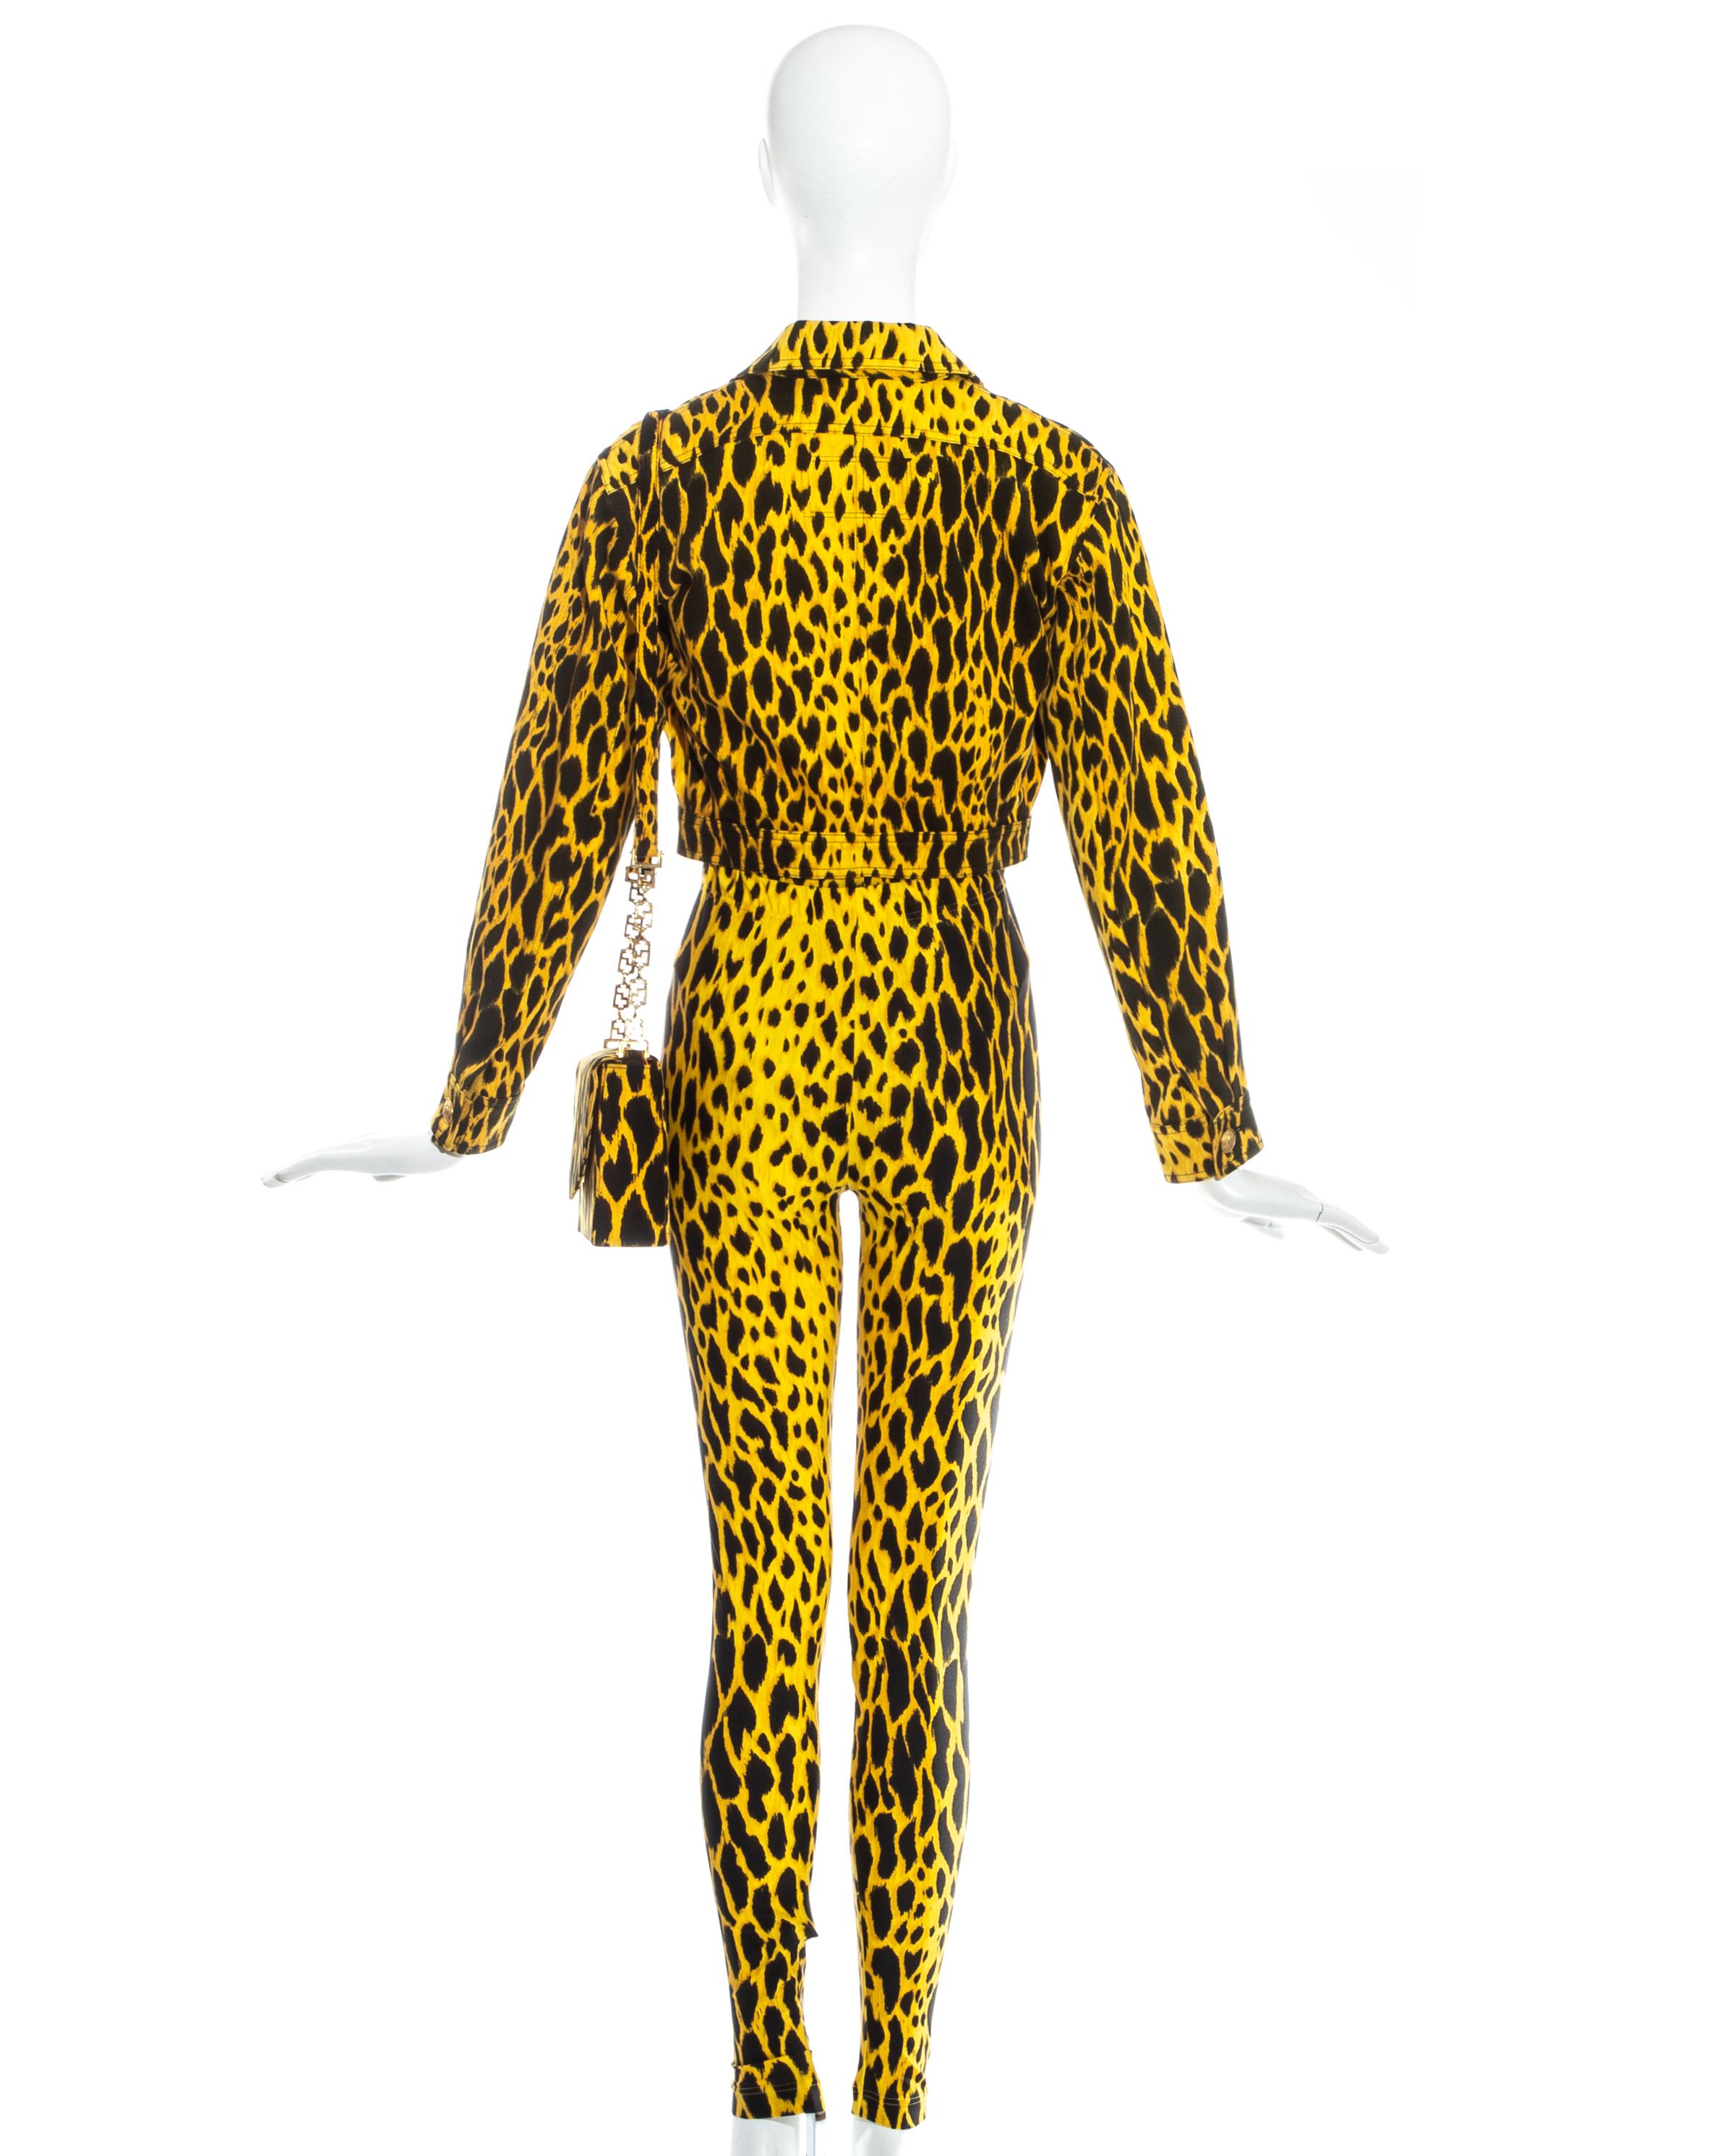 Women's Gianni Versace yellow leopard print four piece ensemble, ss 1992